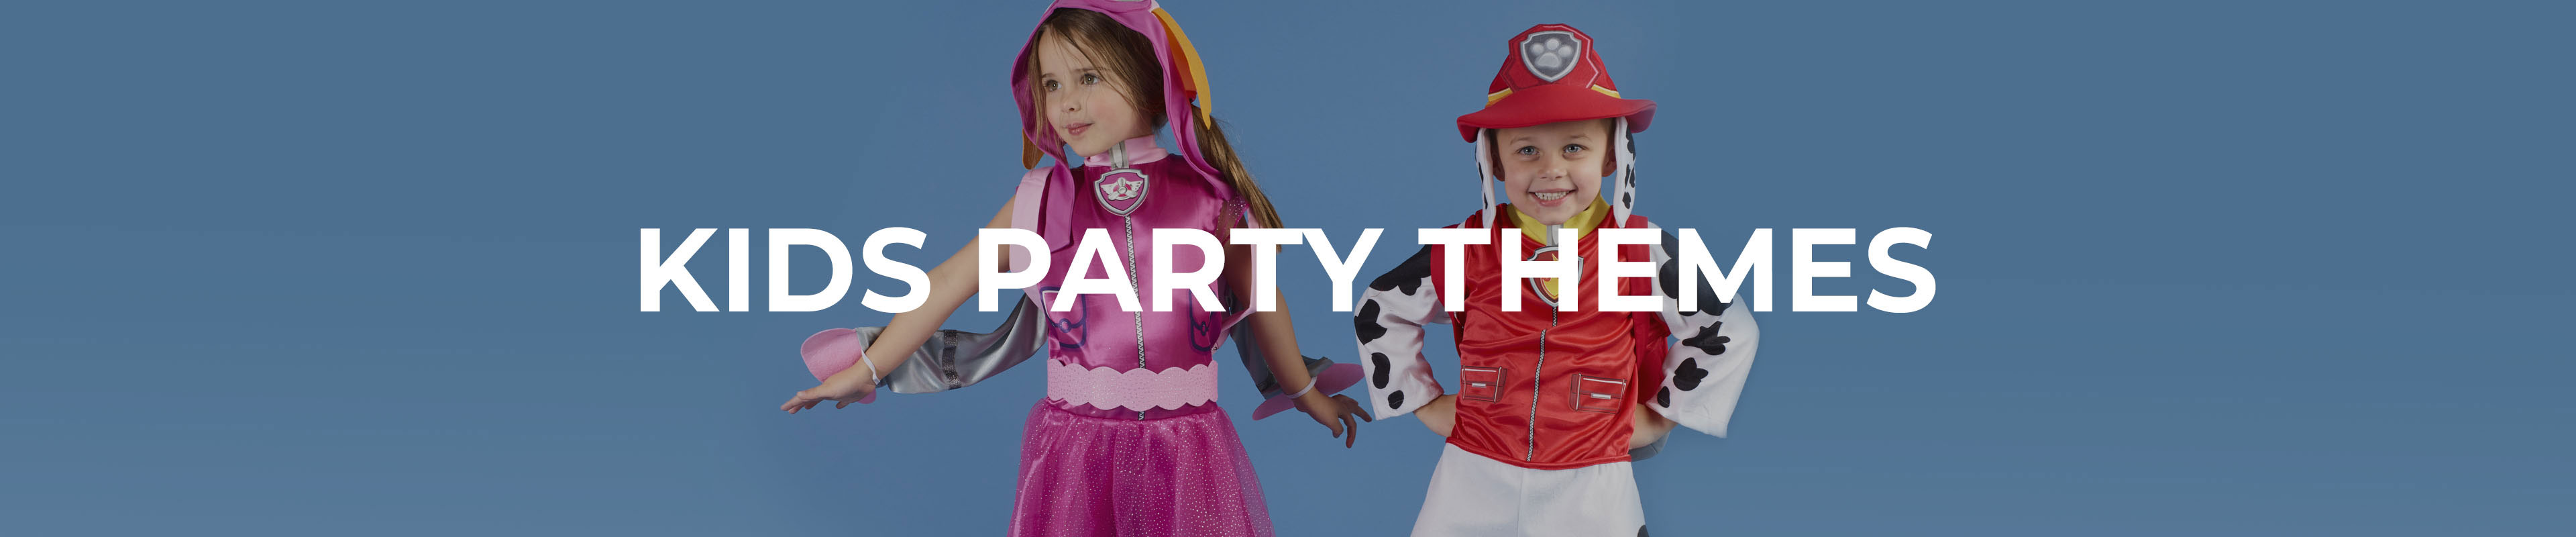 Shop Our Kids Party Themes Range